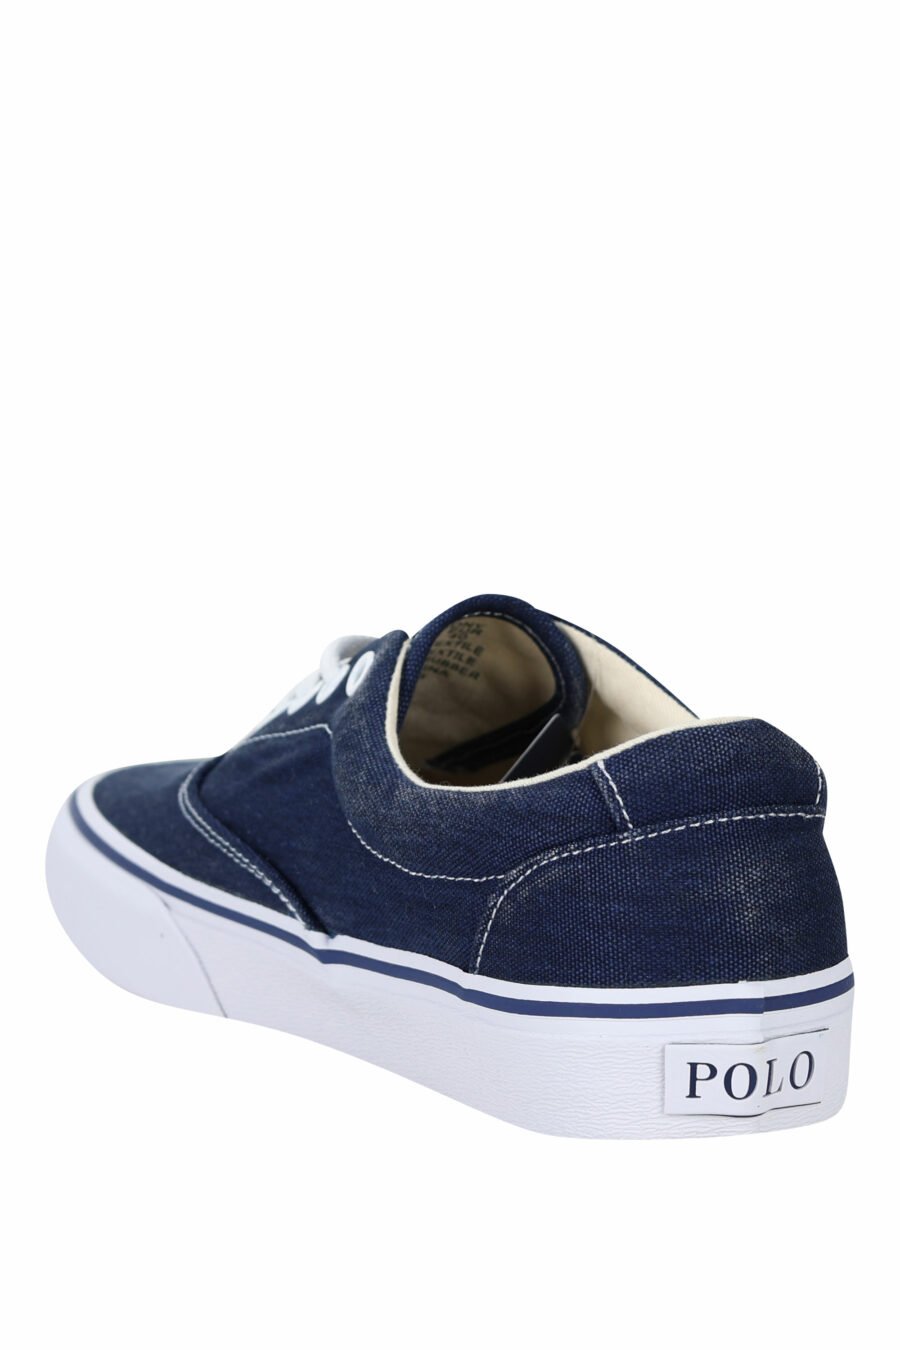 Zapatillas azules denim con minilogo "polo" blanco - 3616536209885 3